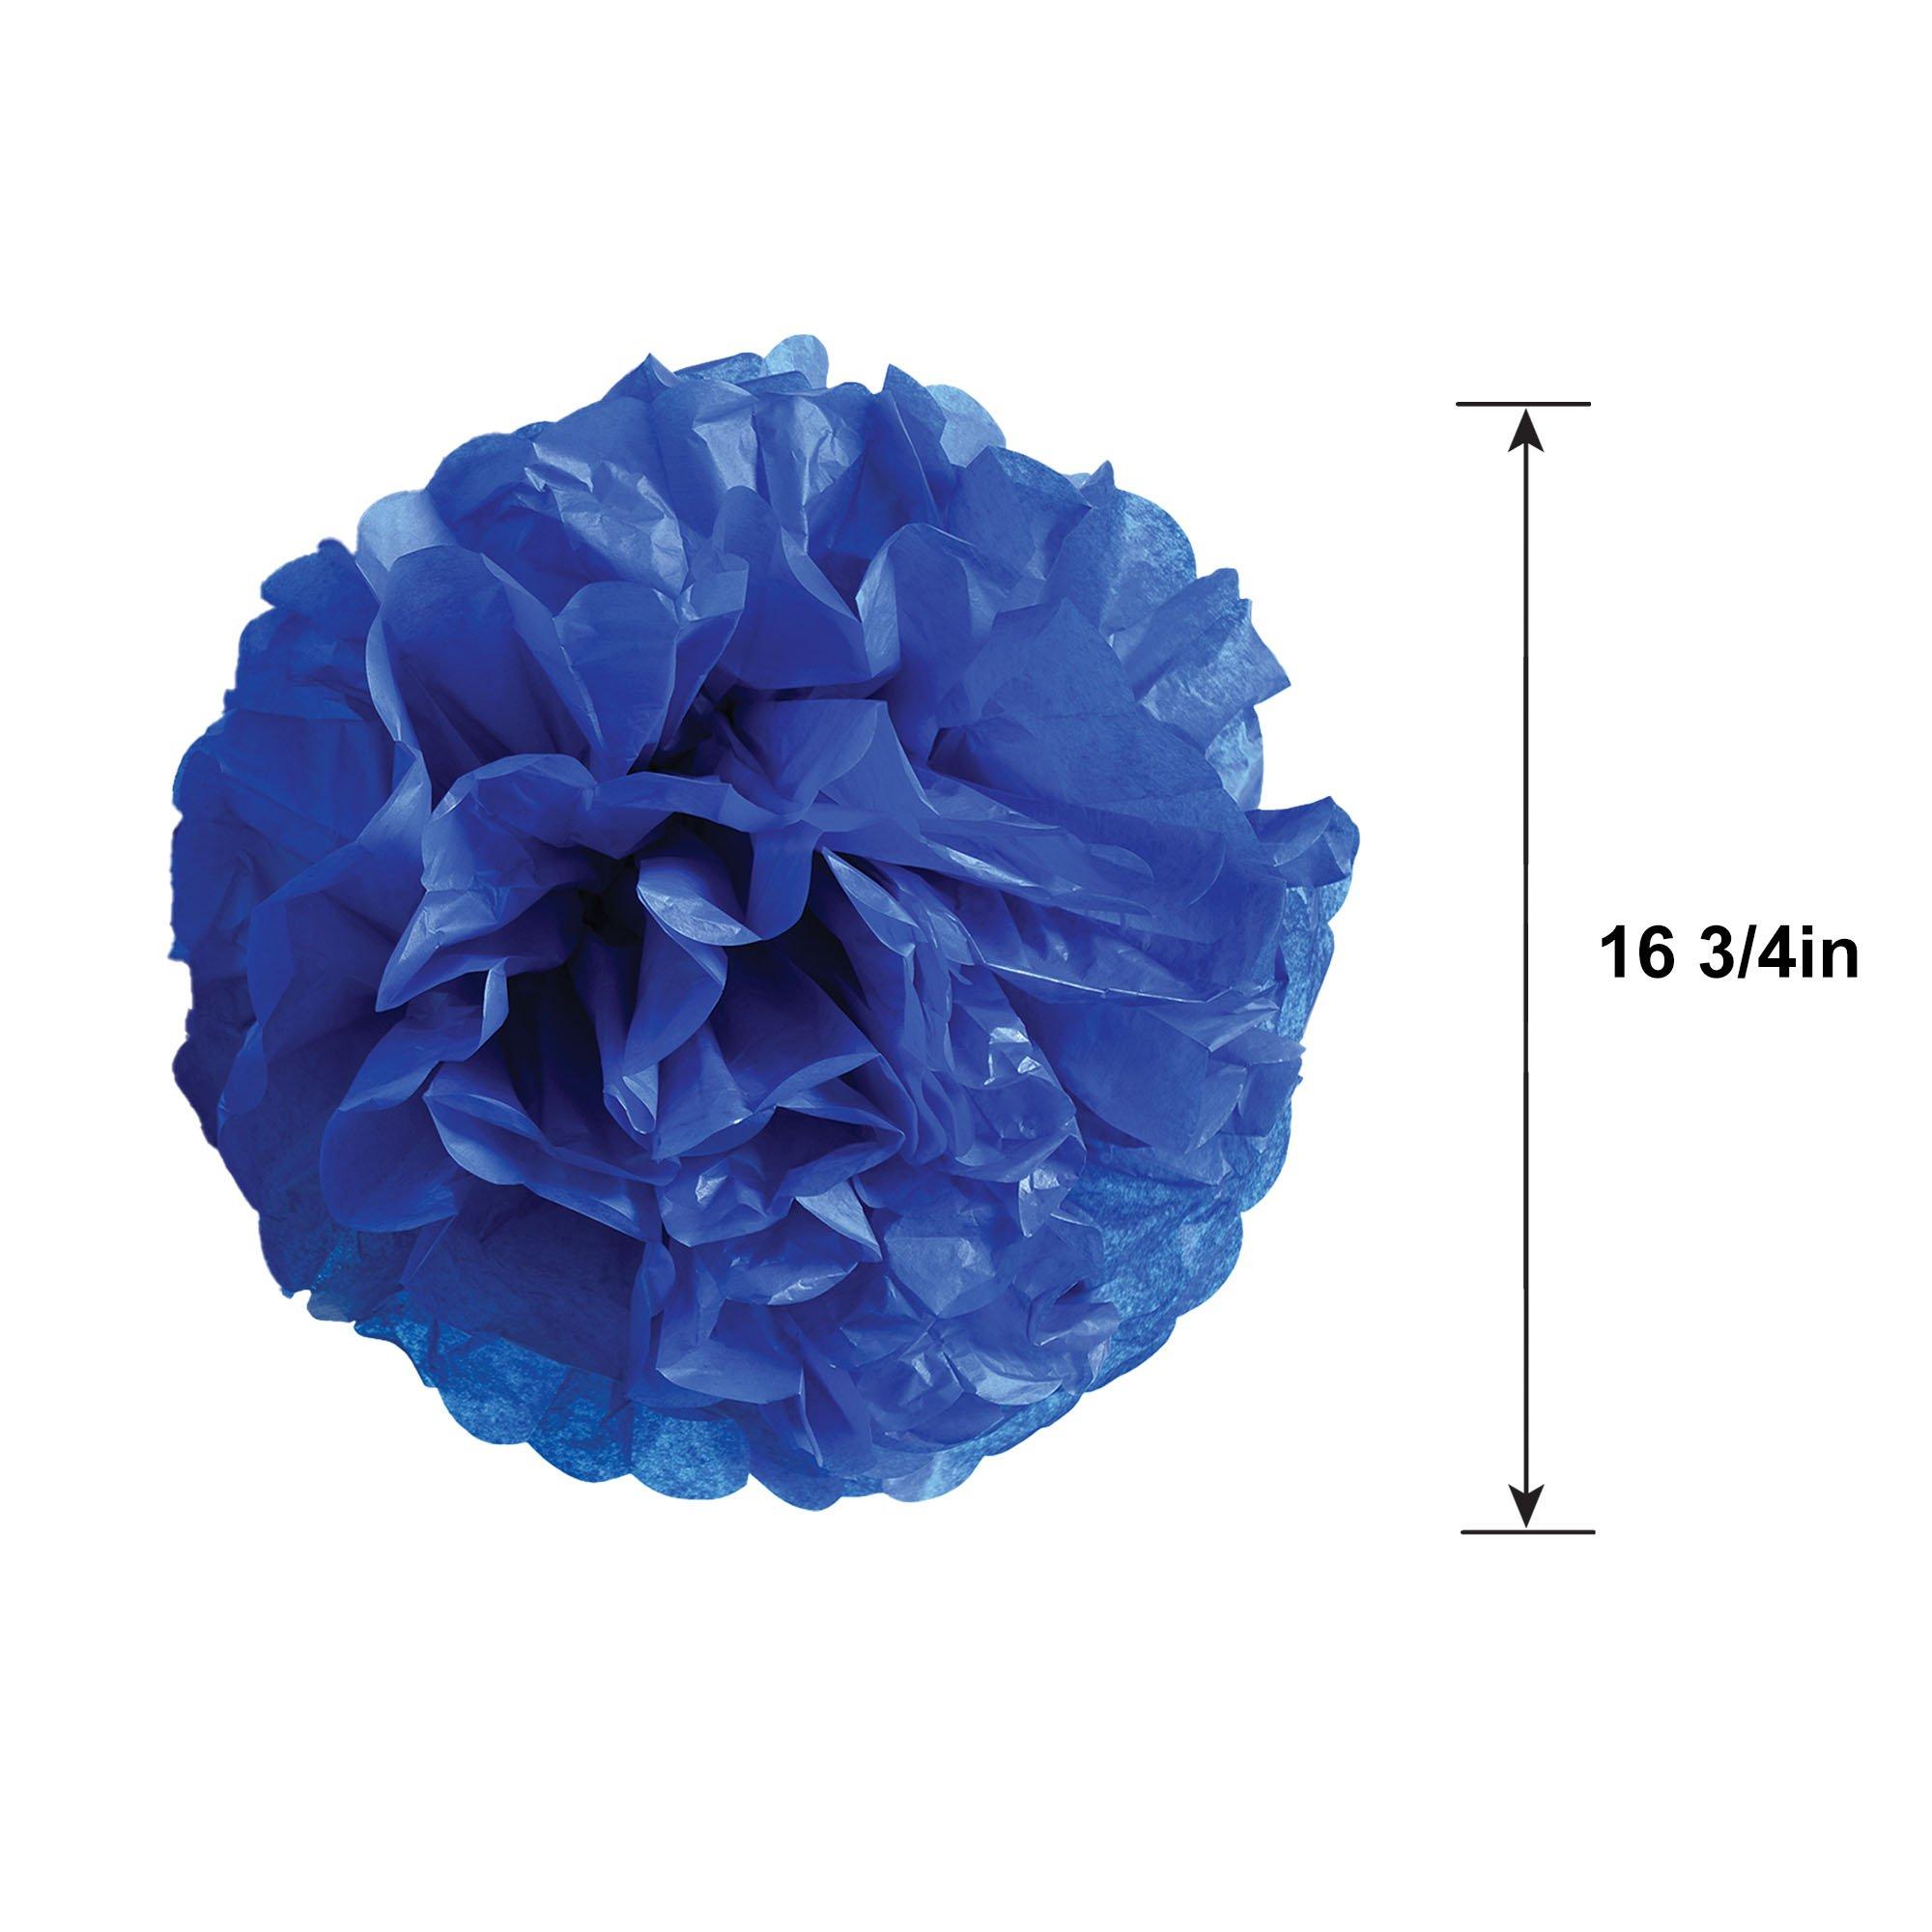 Rounded Royal Blue Tissue Pom Poms, 16 3/4in, 3ct